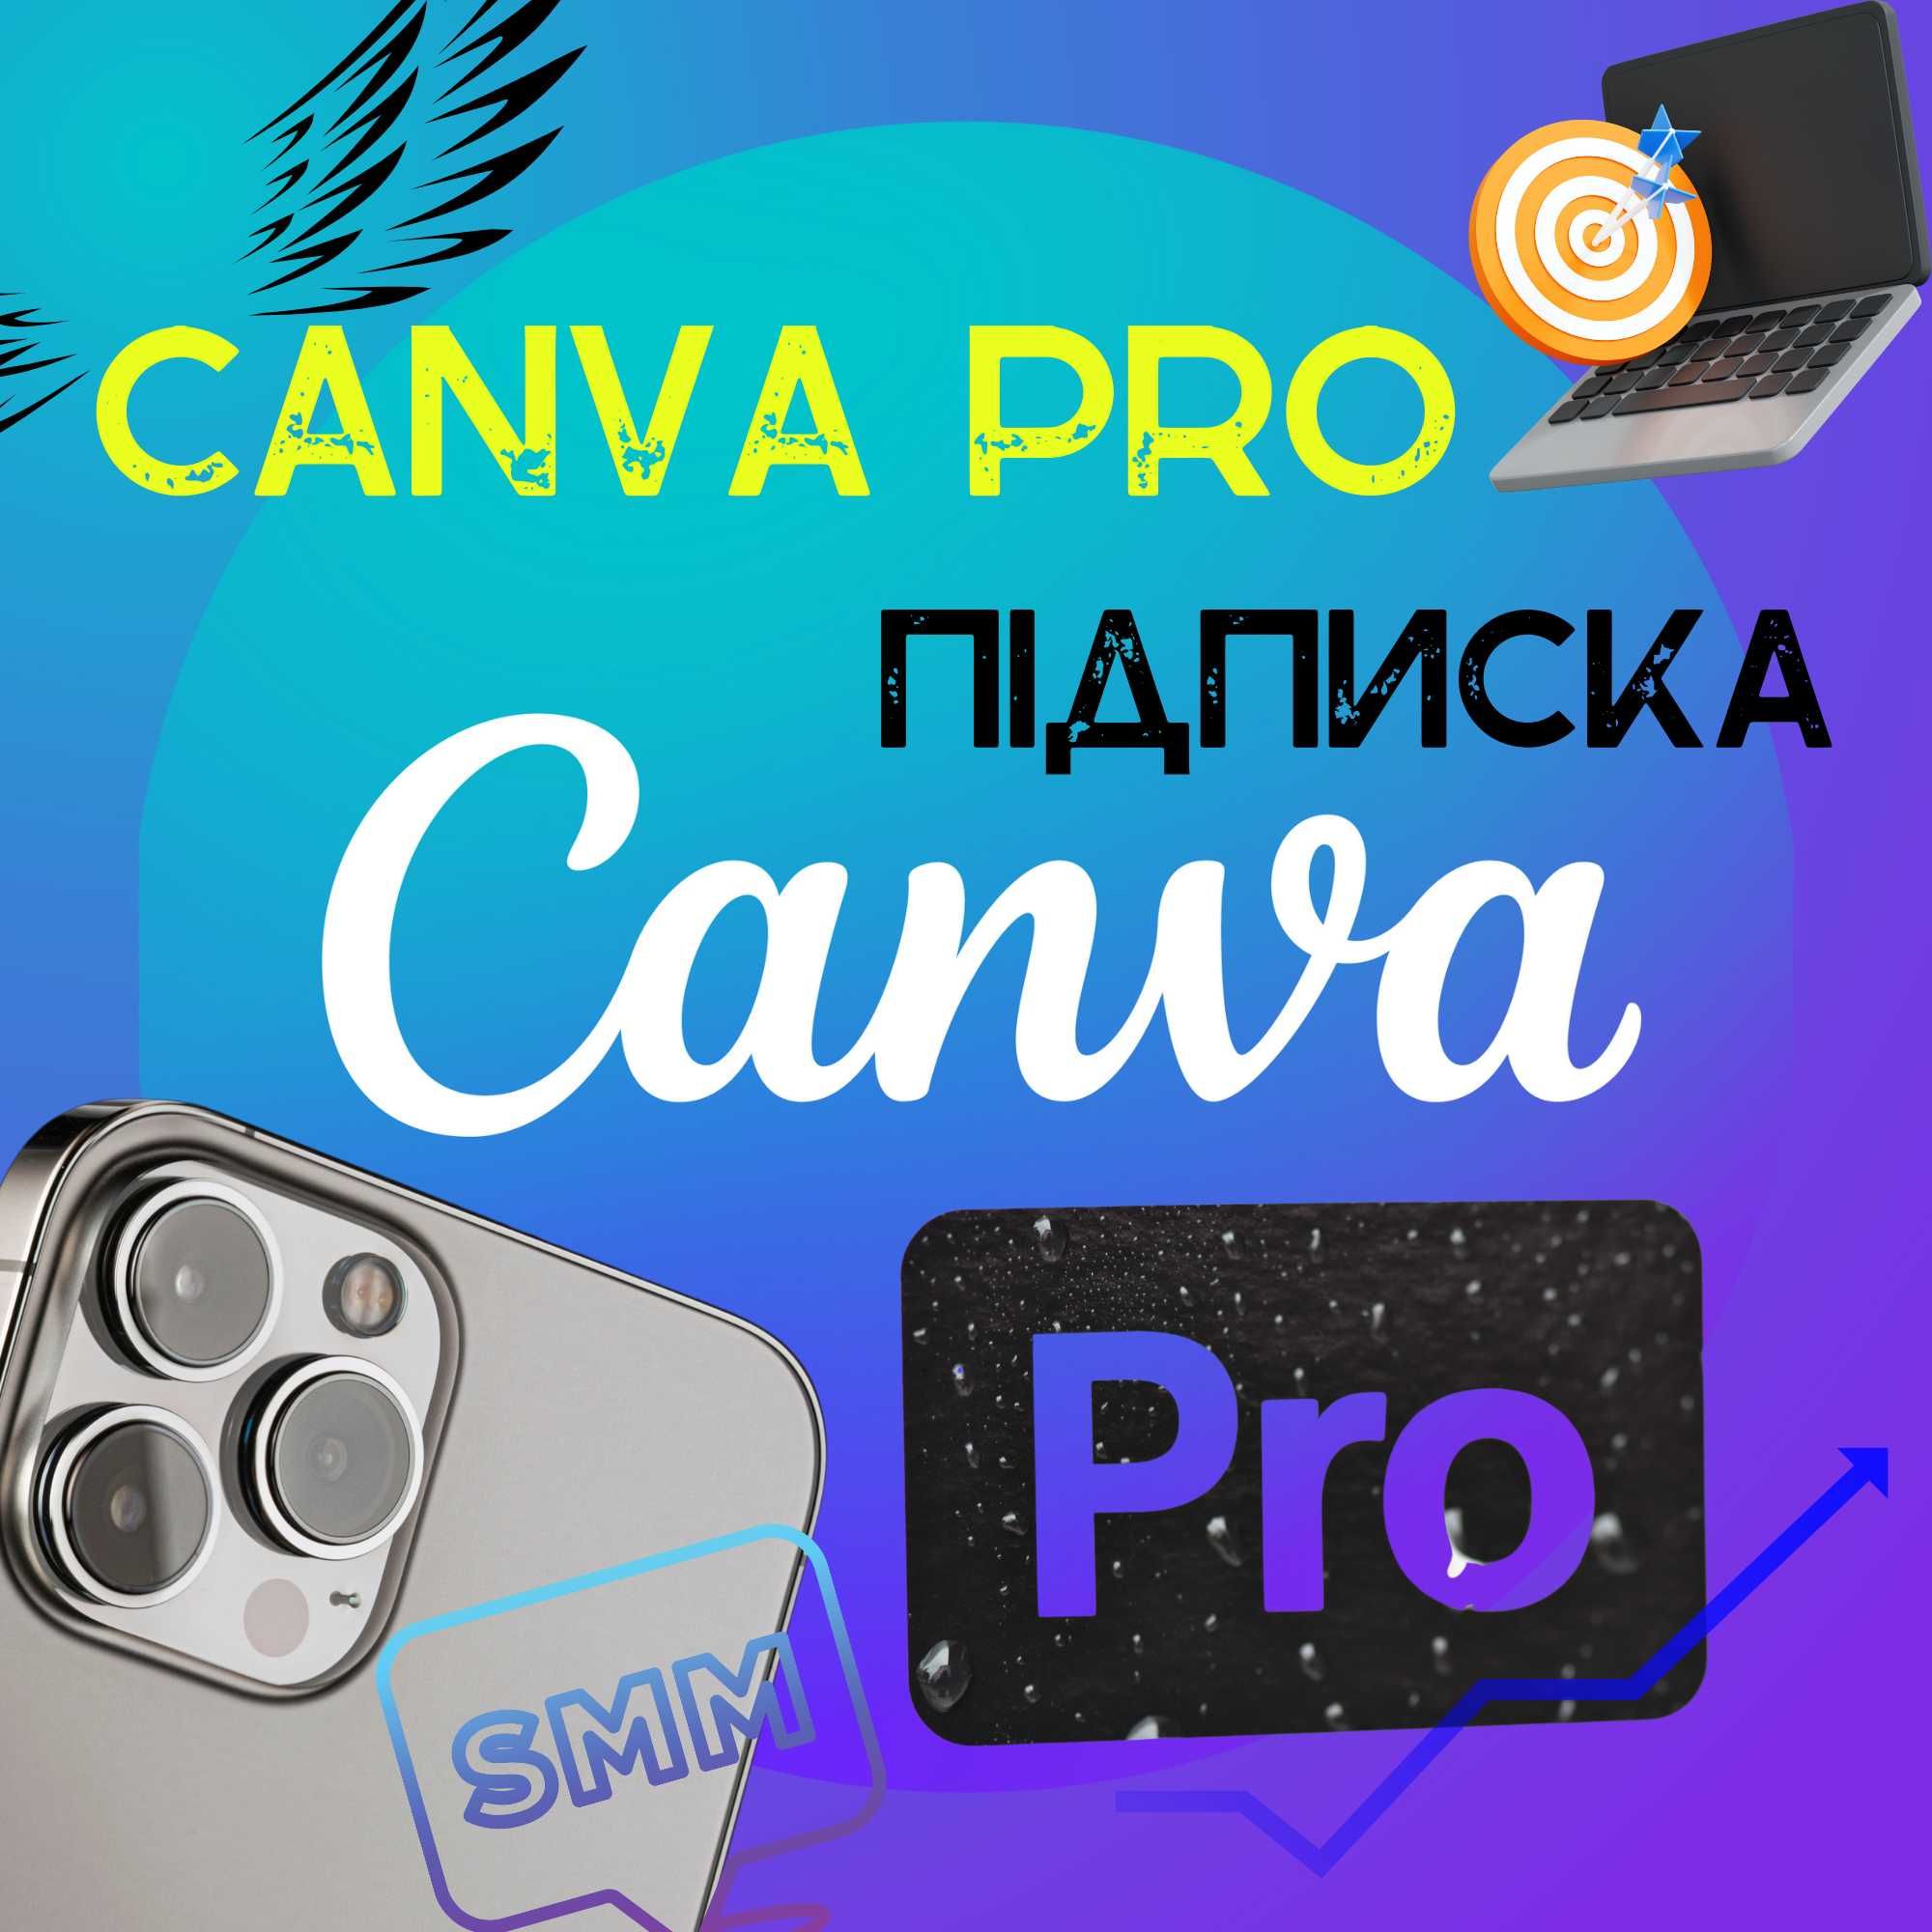 Canva Pro Підписка; Канва Про подписка; Canva Pro Subscribe